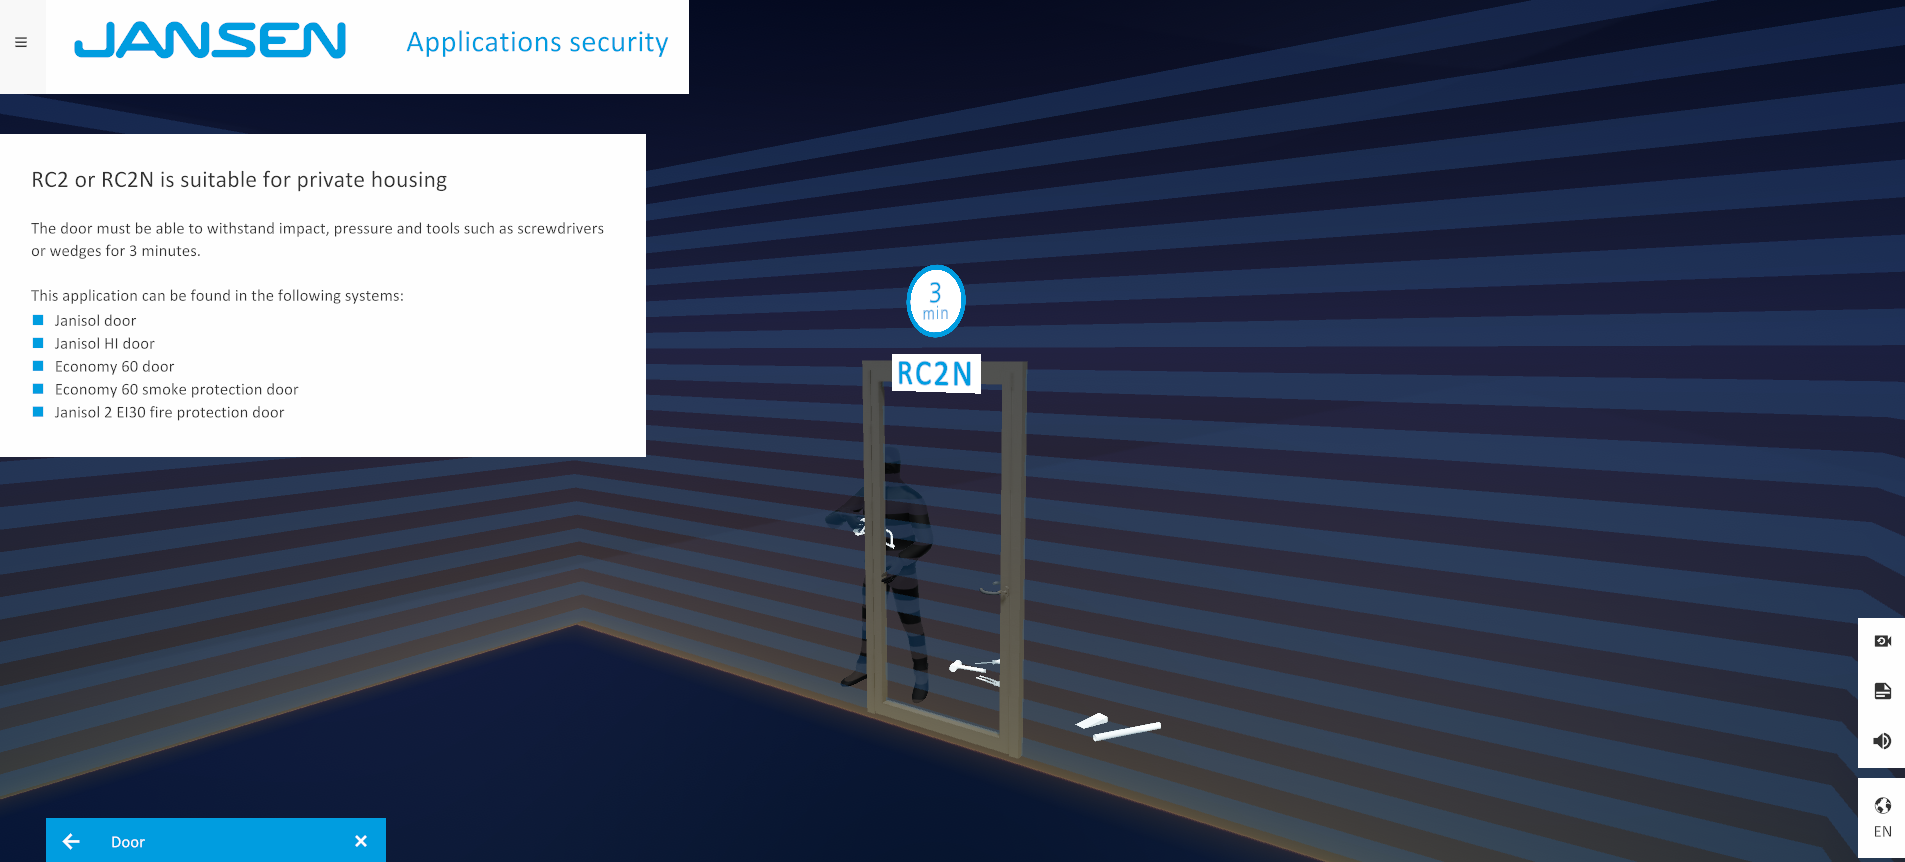 Virtual showroom applications security - Jansen AG